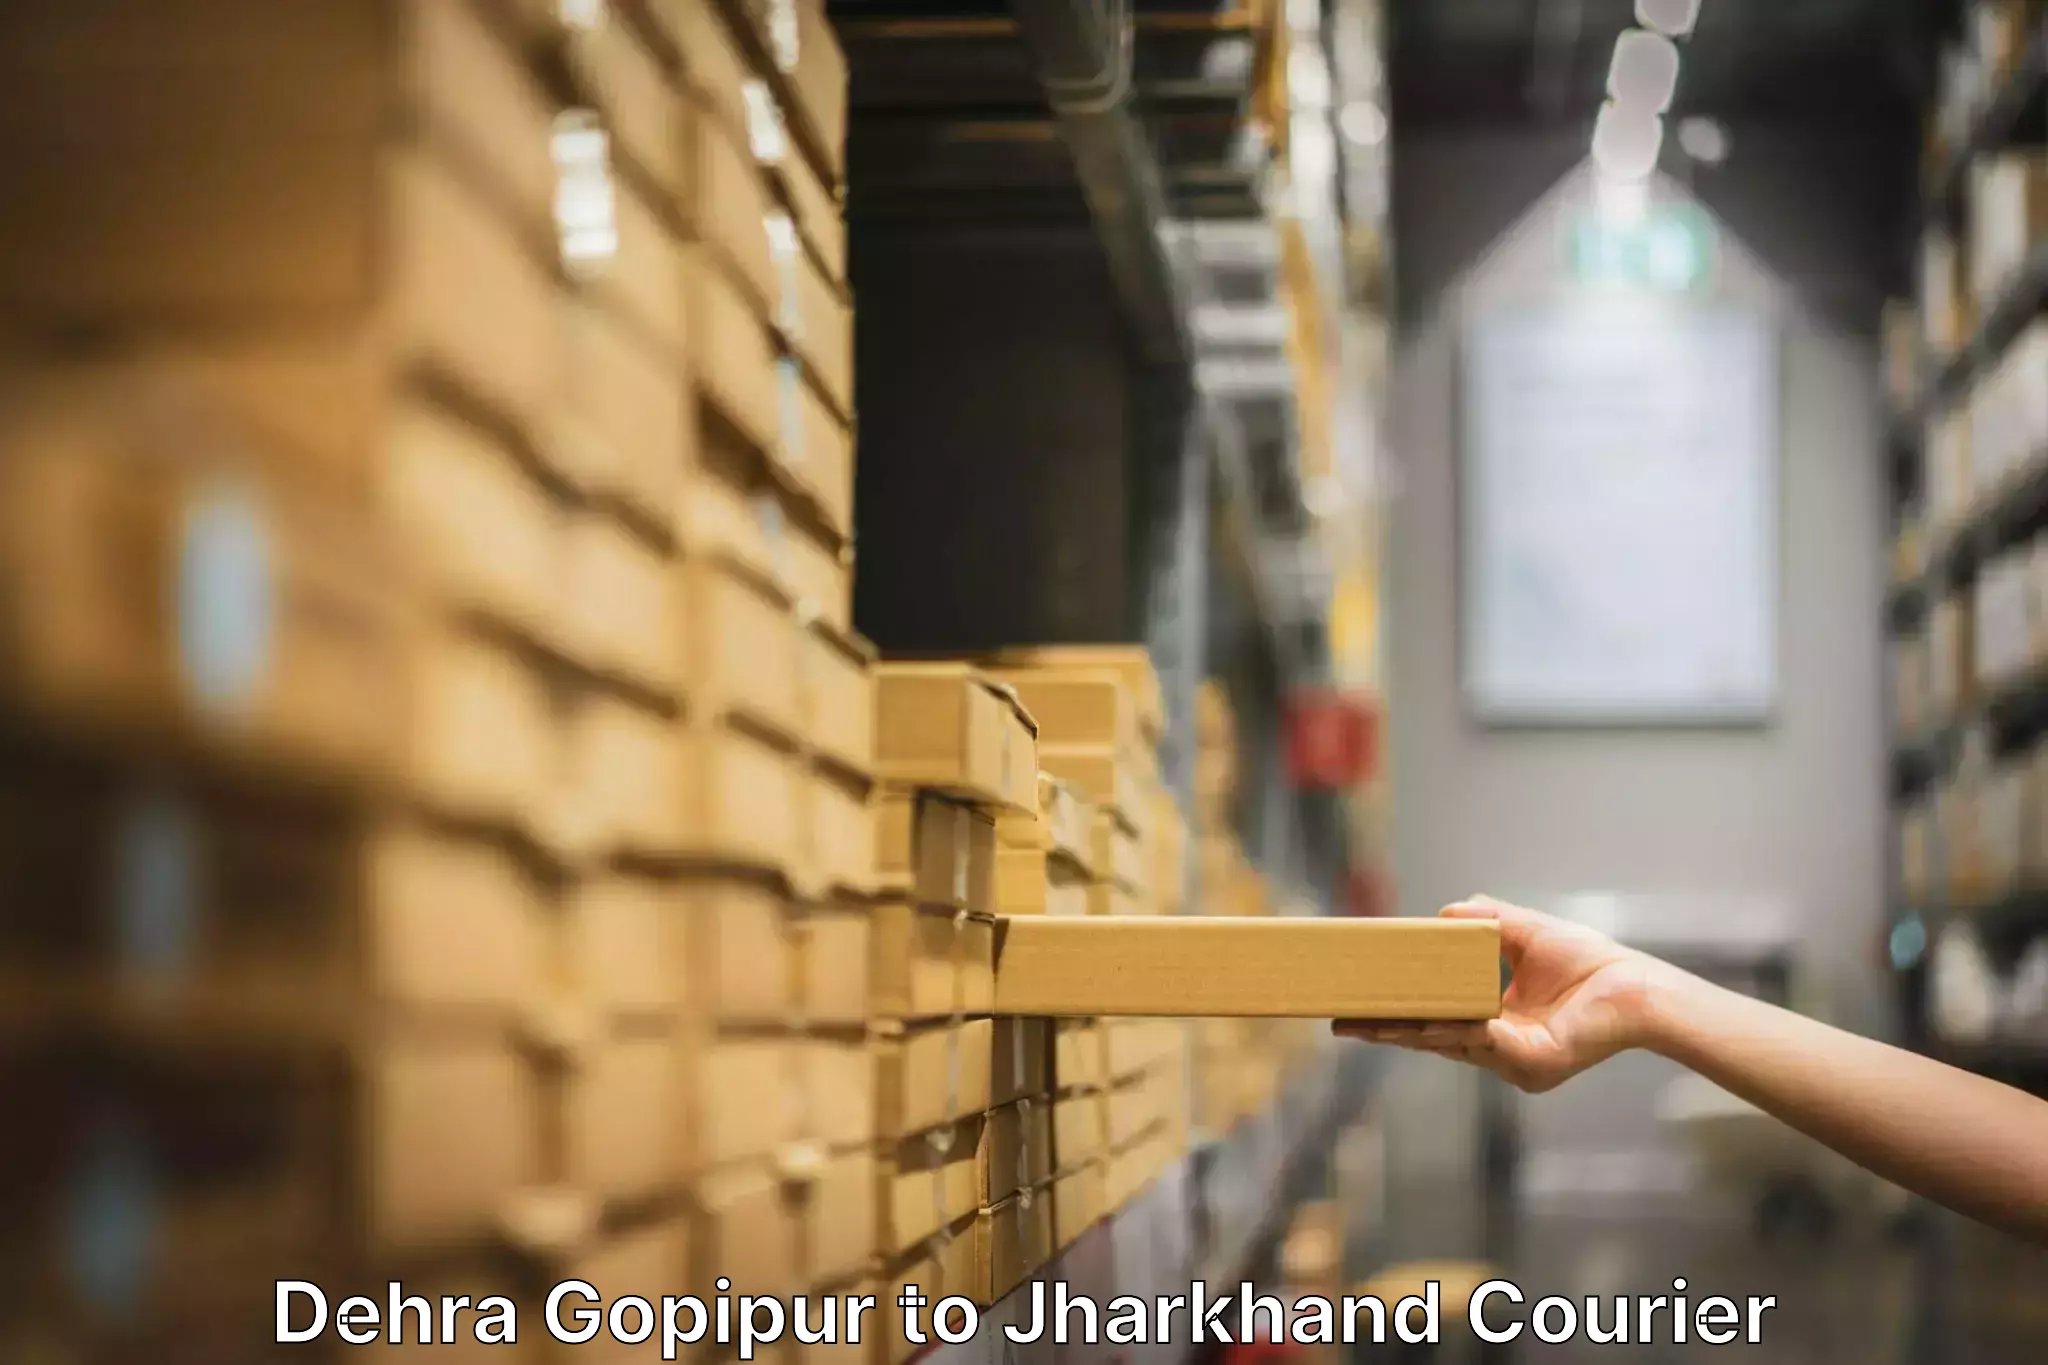 Professional moving company Dehra Gopipur to Nirsa